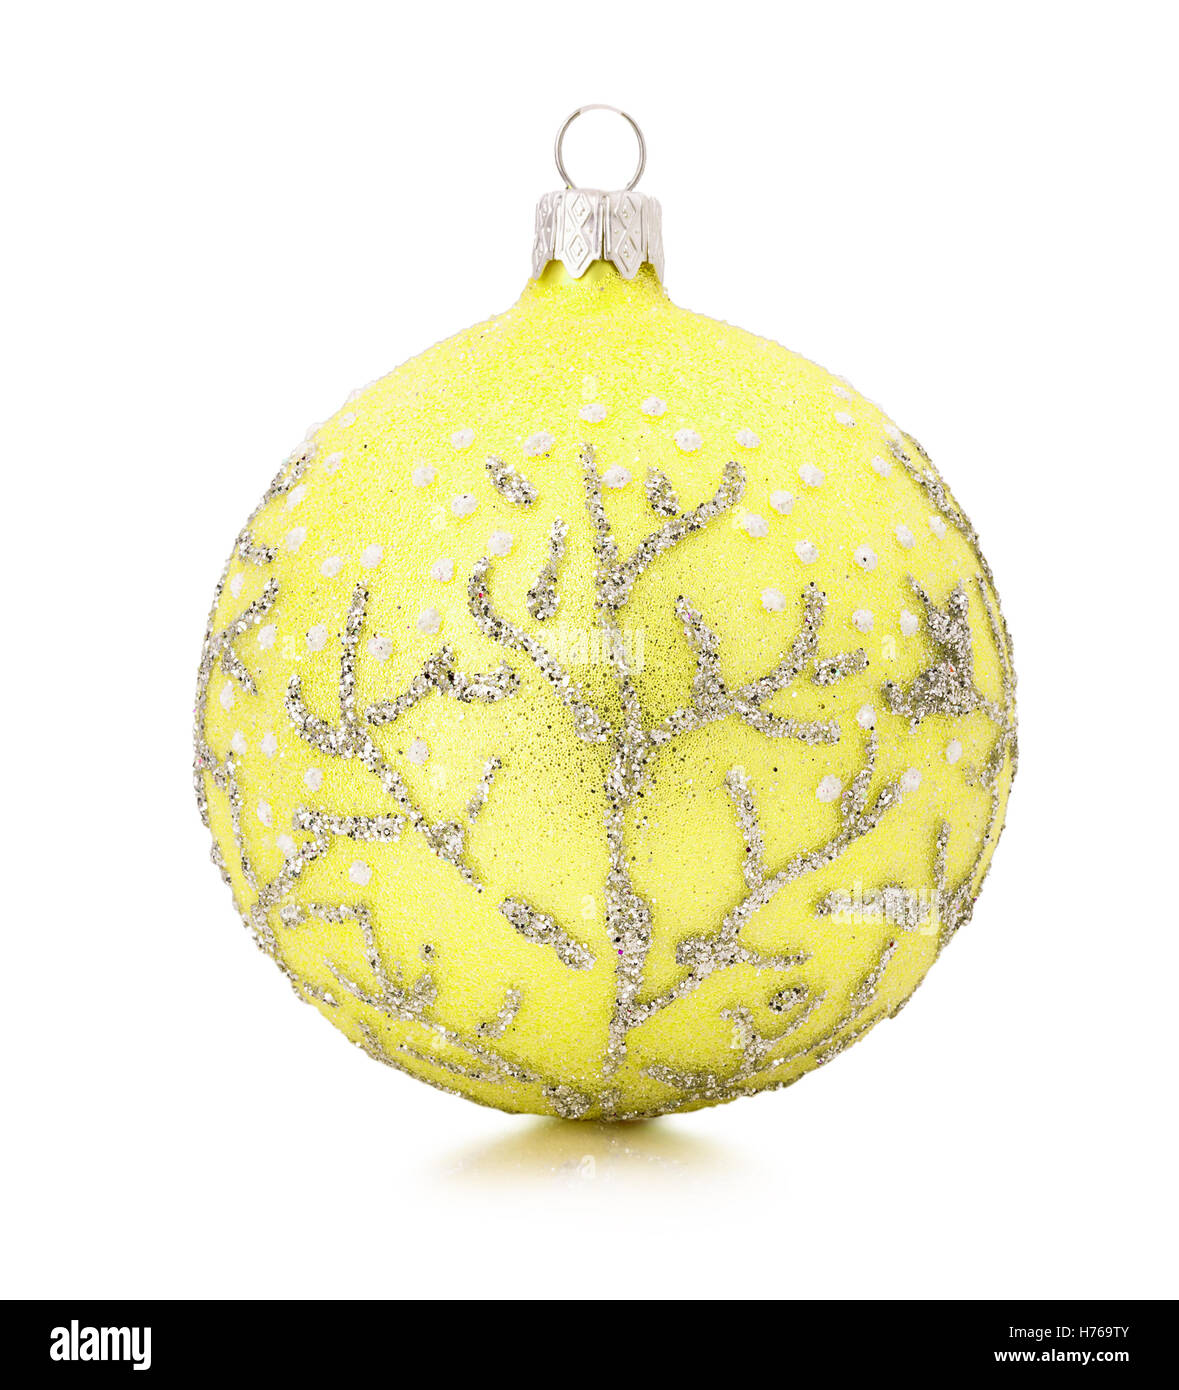 Christmas Tree ball jaune isolé sur fond blanc. Banque D'Images